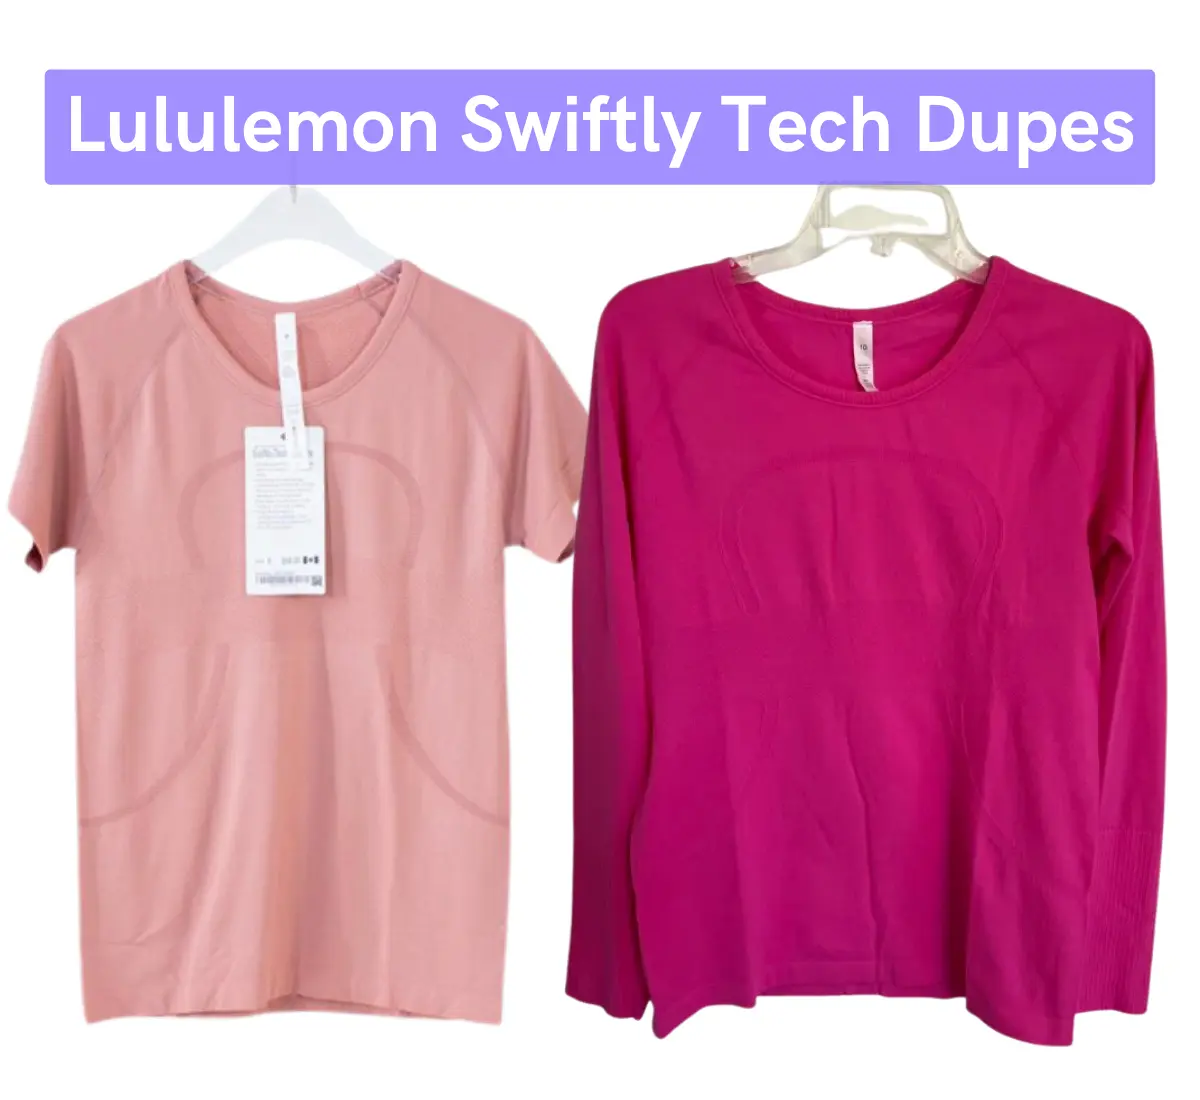 The best lululemon swiftly tech dupes (under $25)